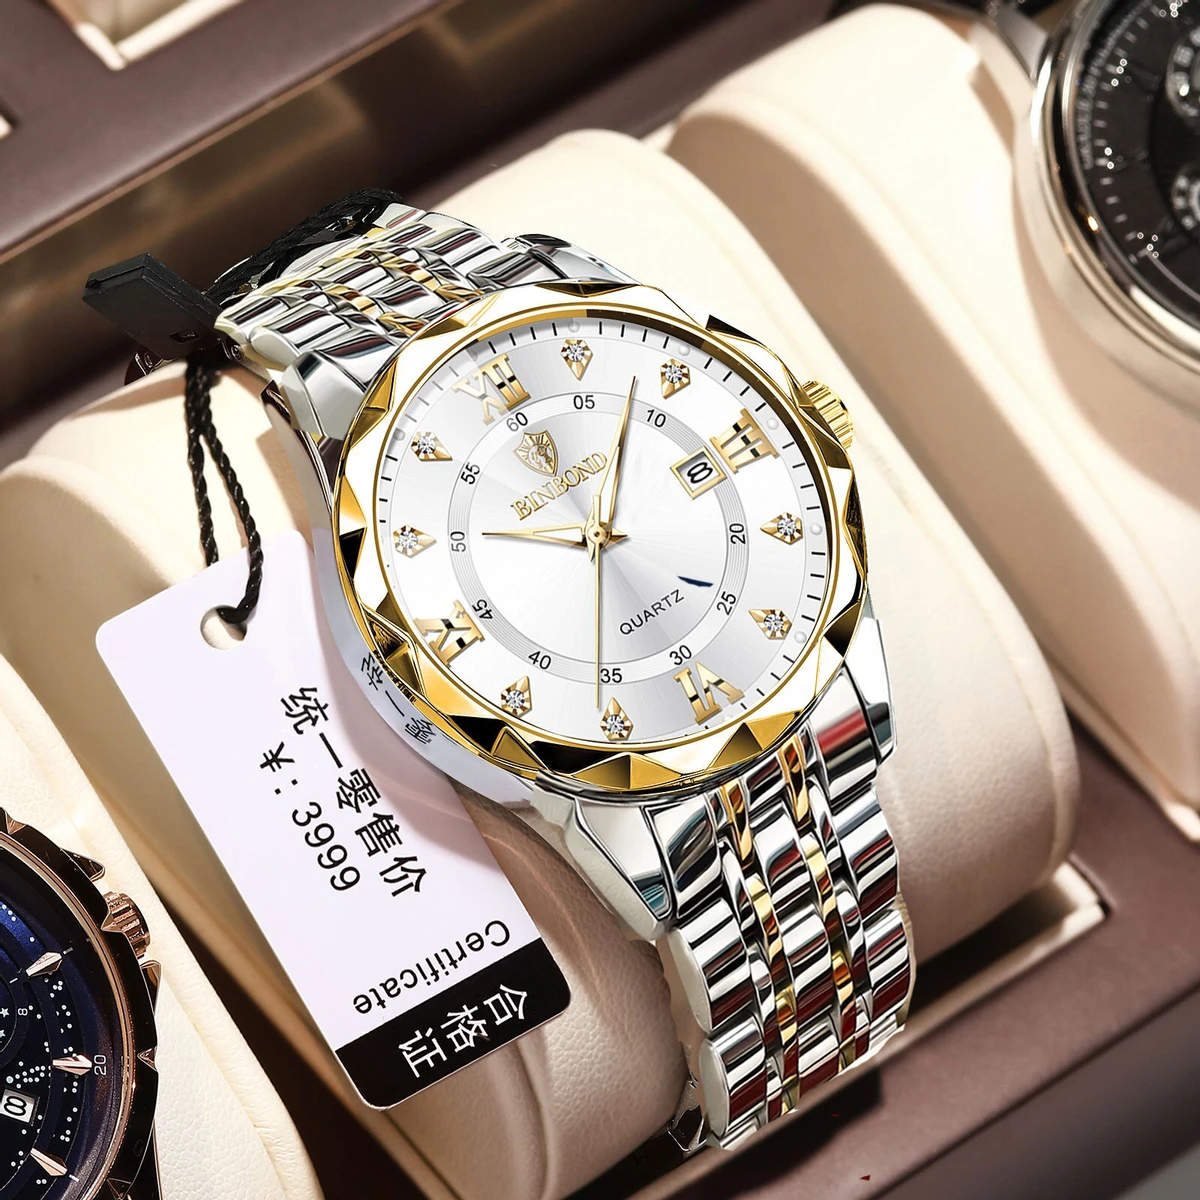 Luxury Binbond authentic men's watch waterproof night light calendar watch men's quartz watch ceiling glass- Silver & Golden